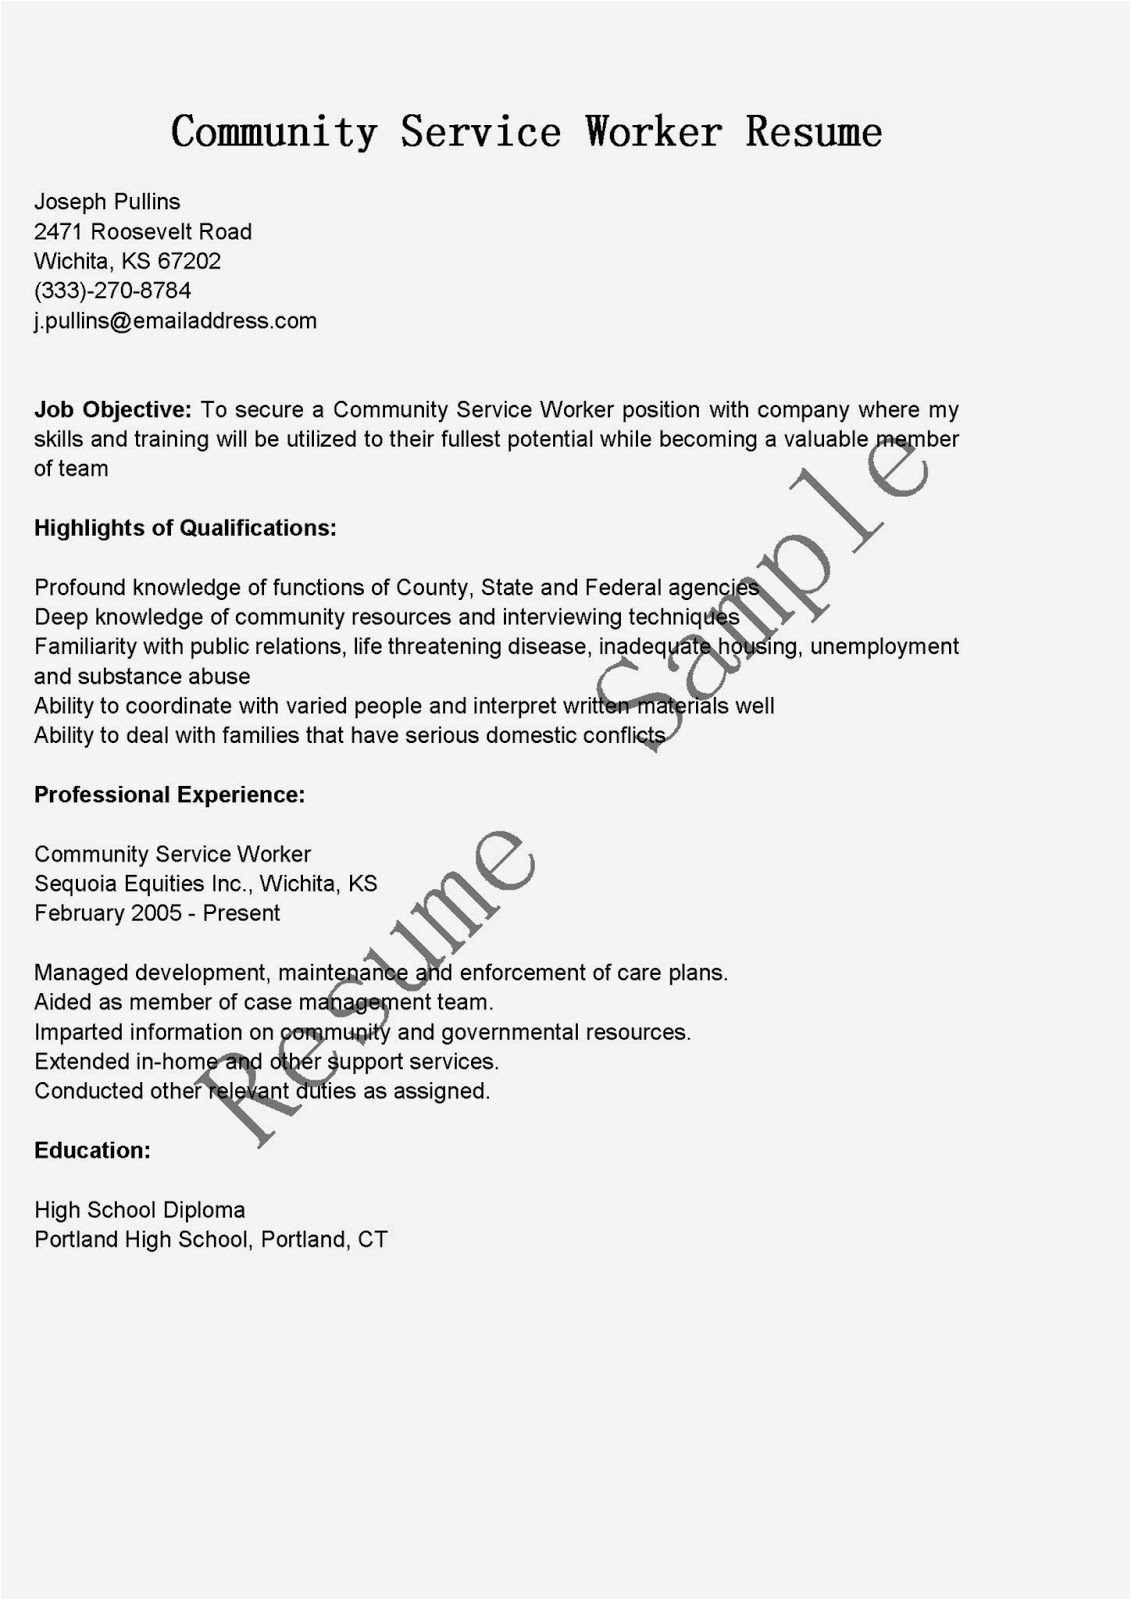 Sample Resume for Community Service Worker Resume Samples Munity Service Worker Resume Sample